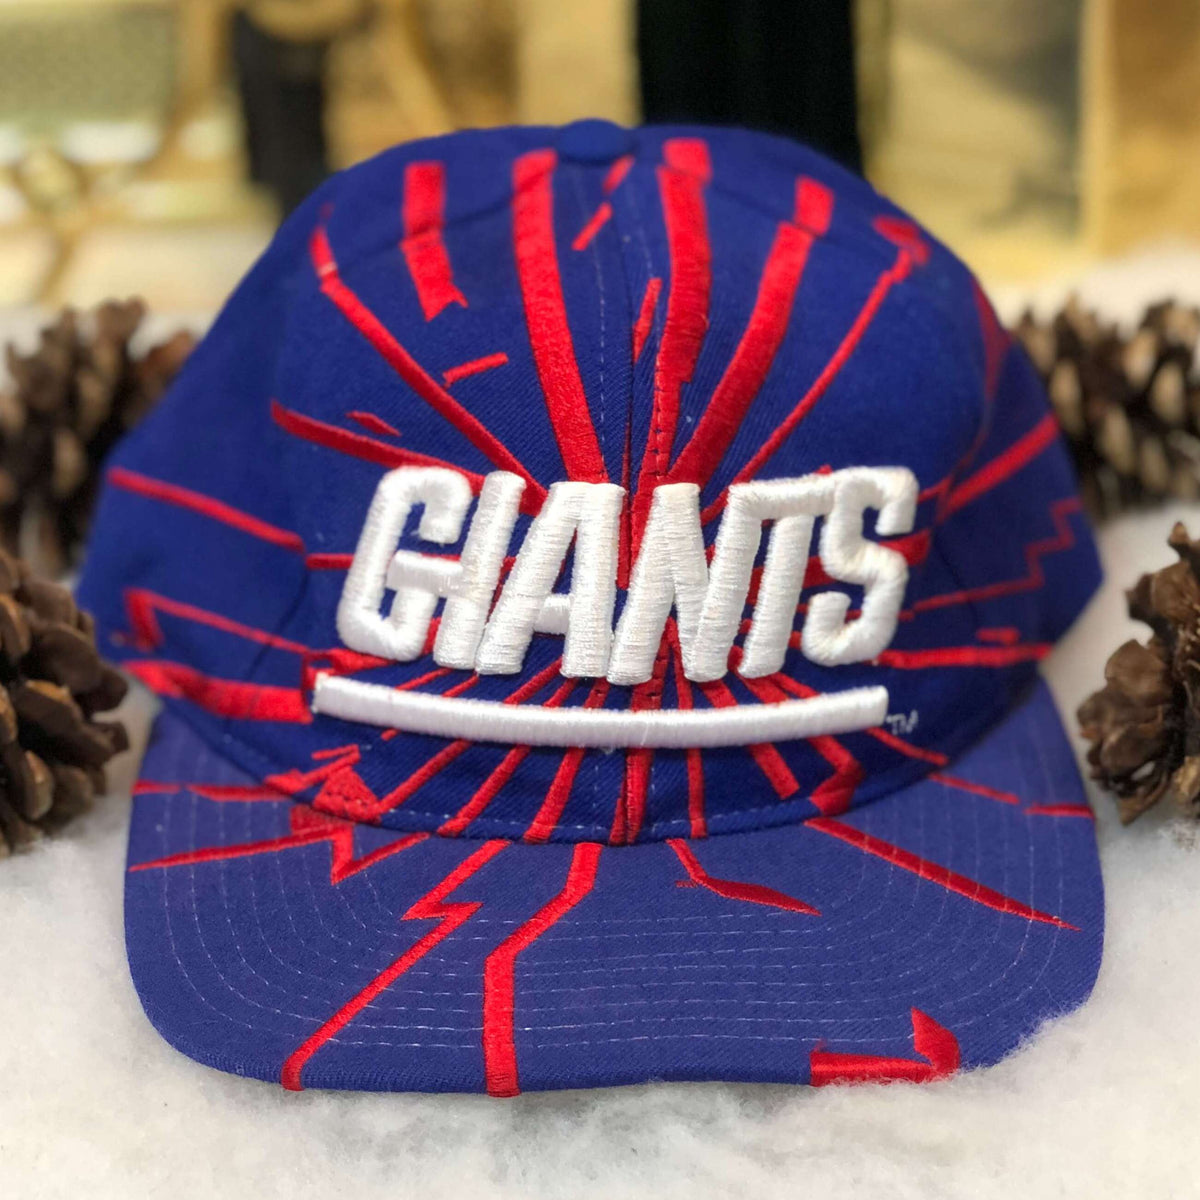 new york giants hat vintage